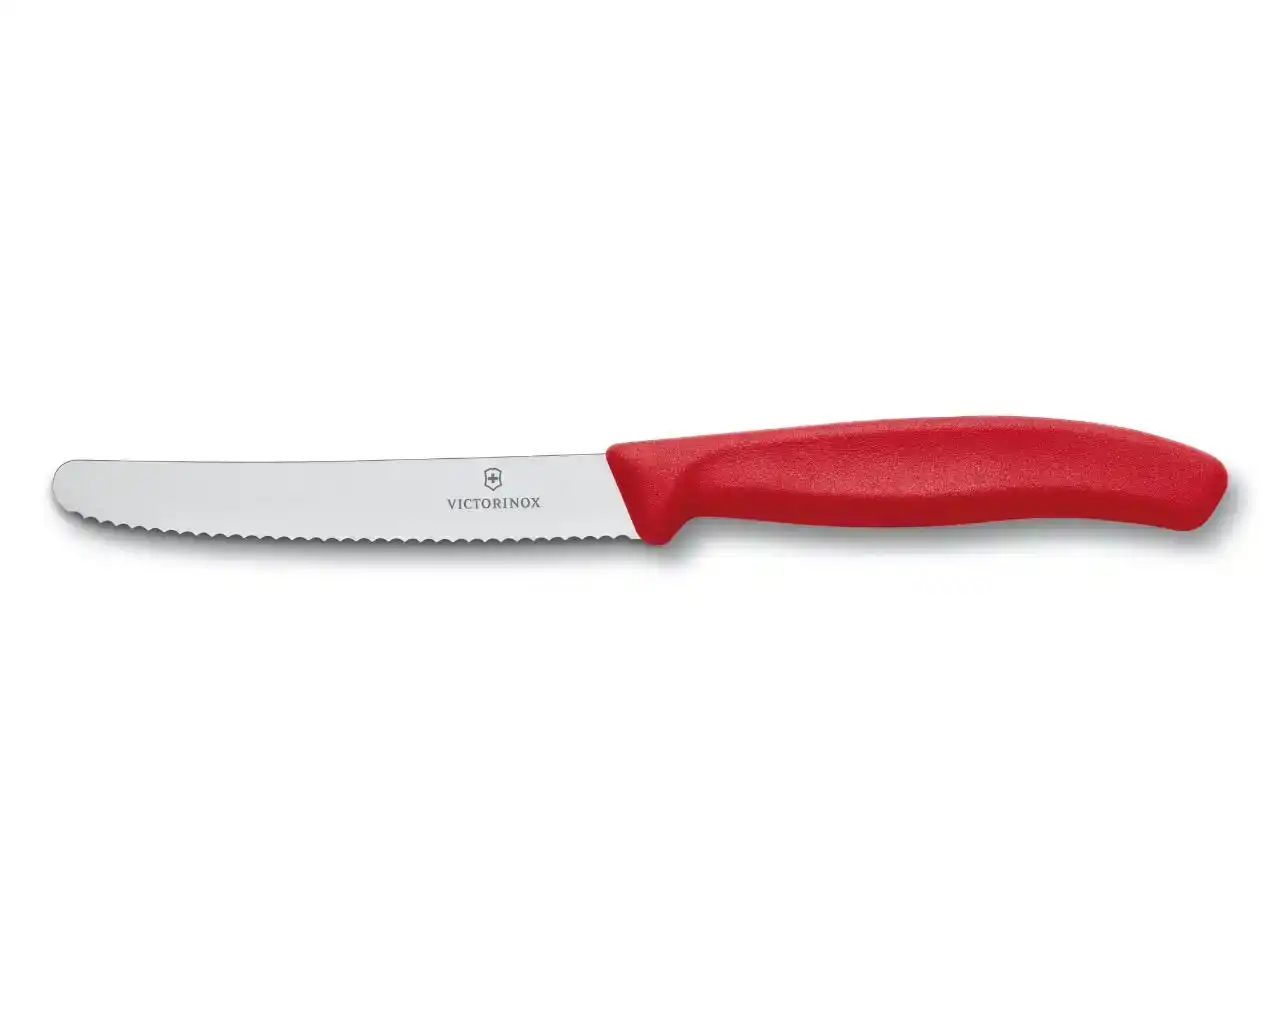 VICTORINOX KNIFE PULL THRU KNIFE SHARPENER SWISS MADE 7.8715 IS